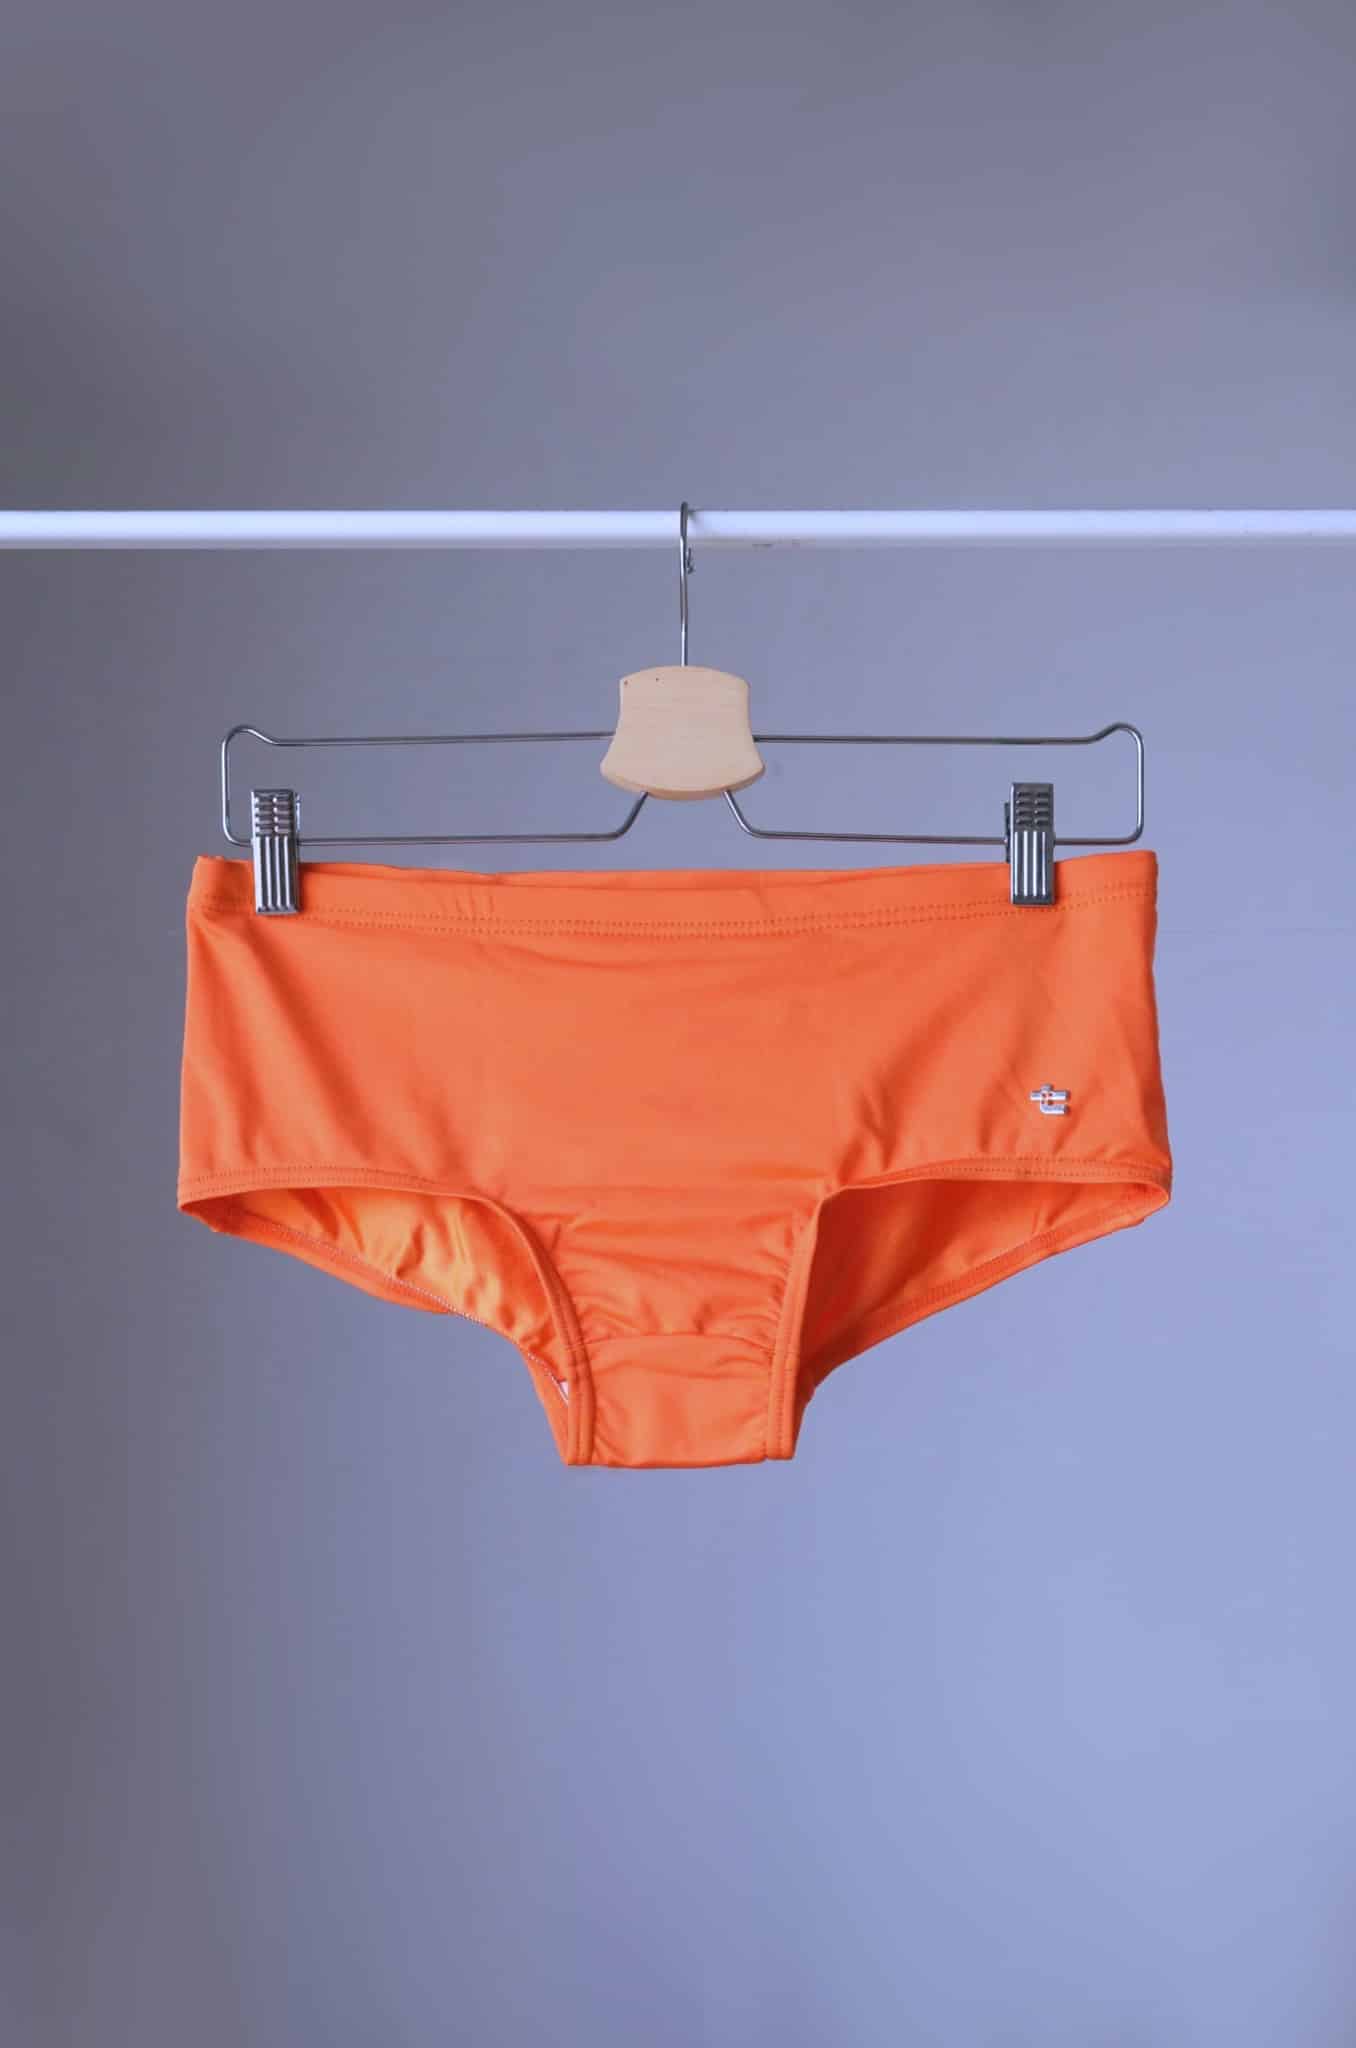 Orange TROPIC Vintage 70's Swim Briefs on hanger